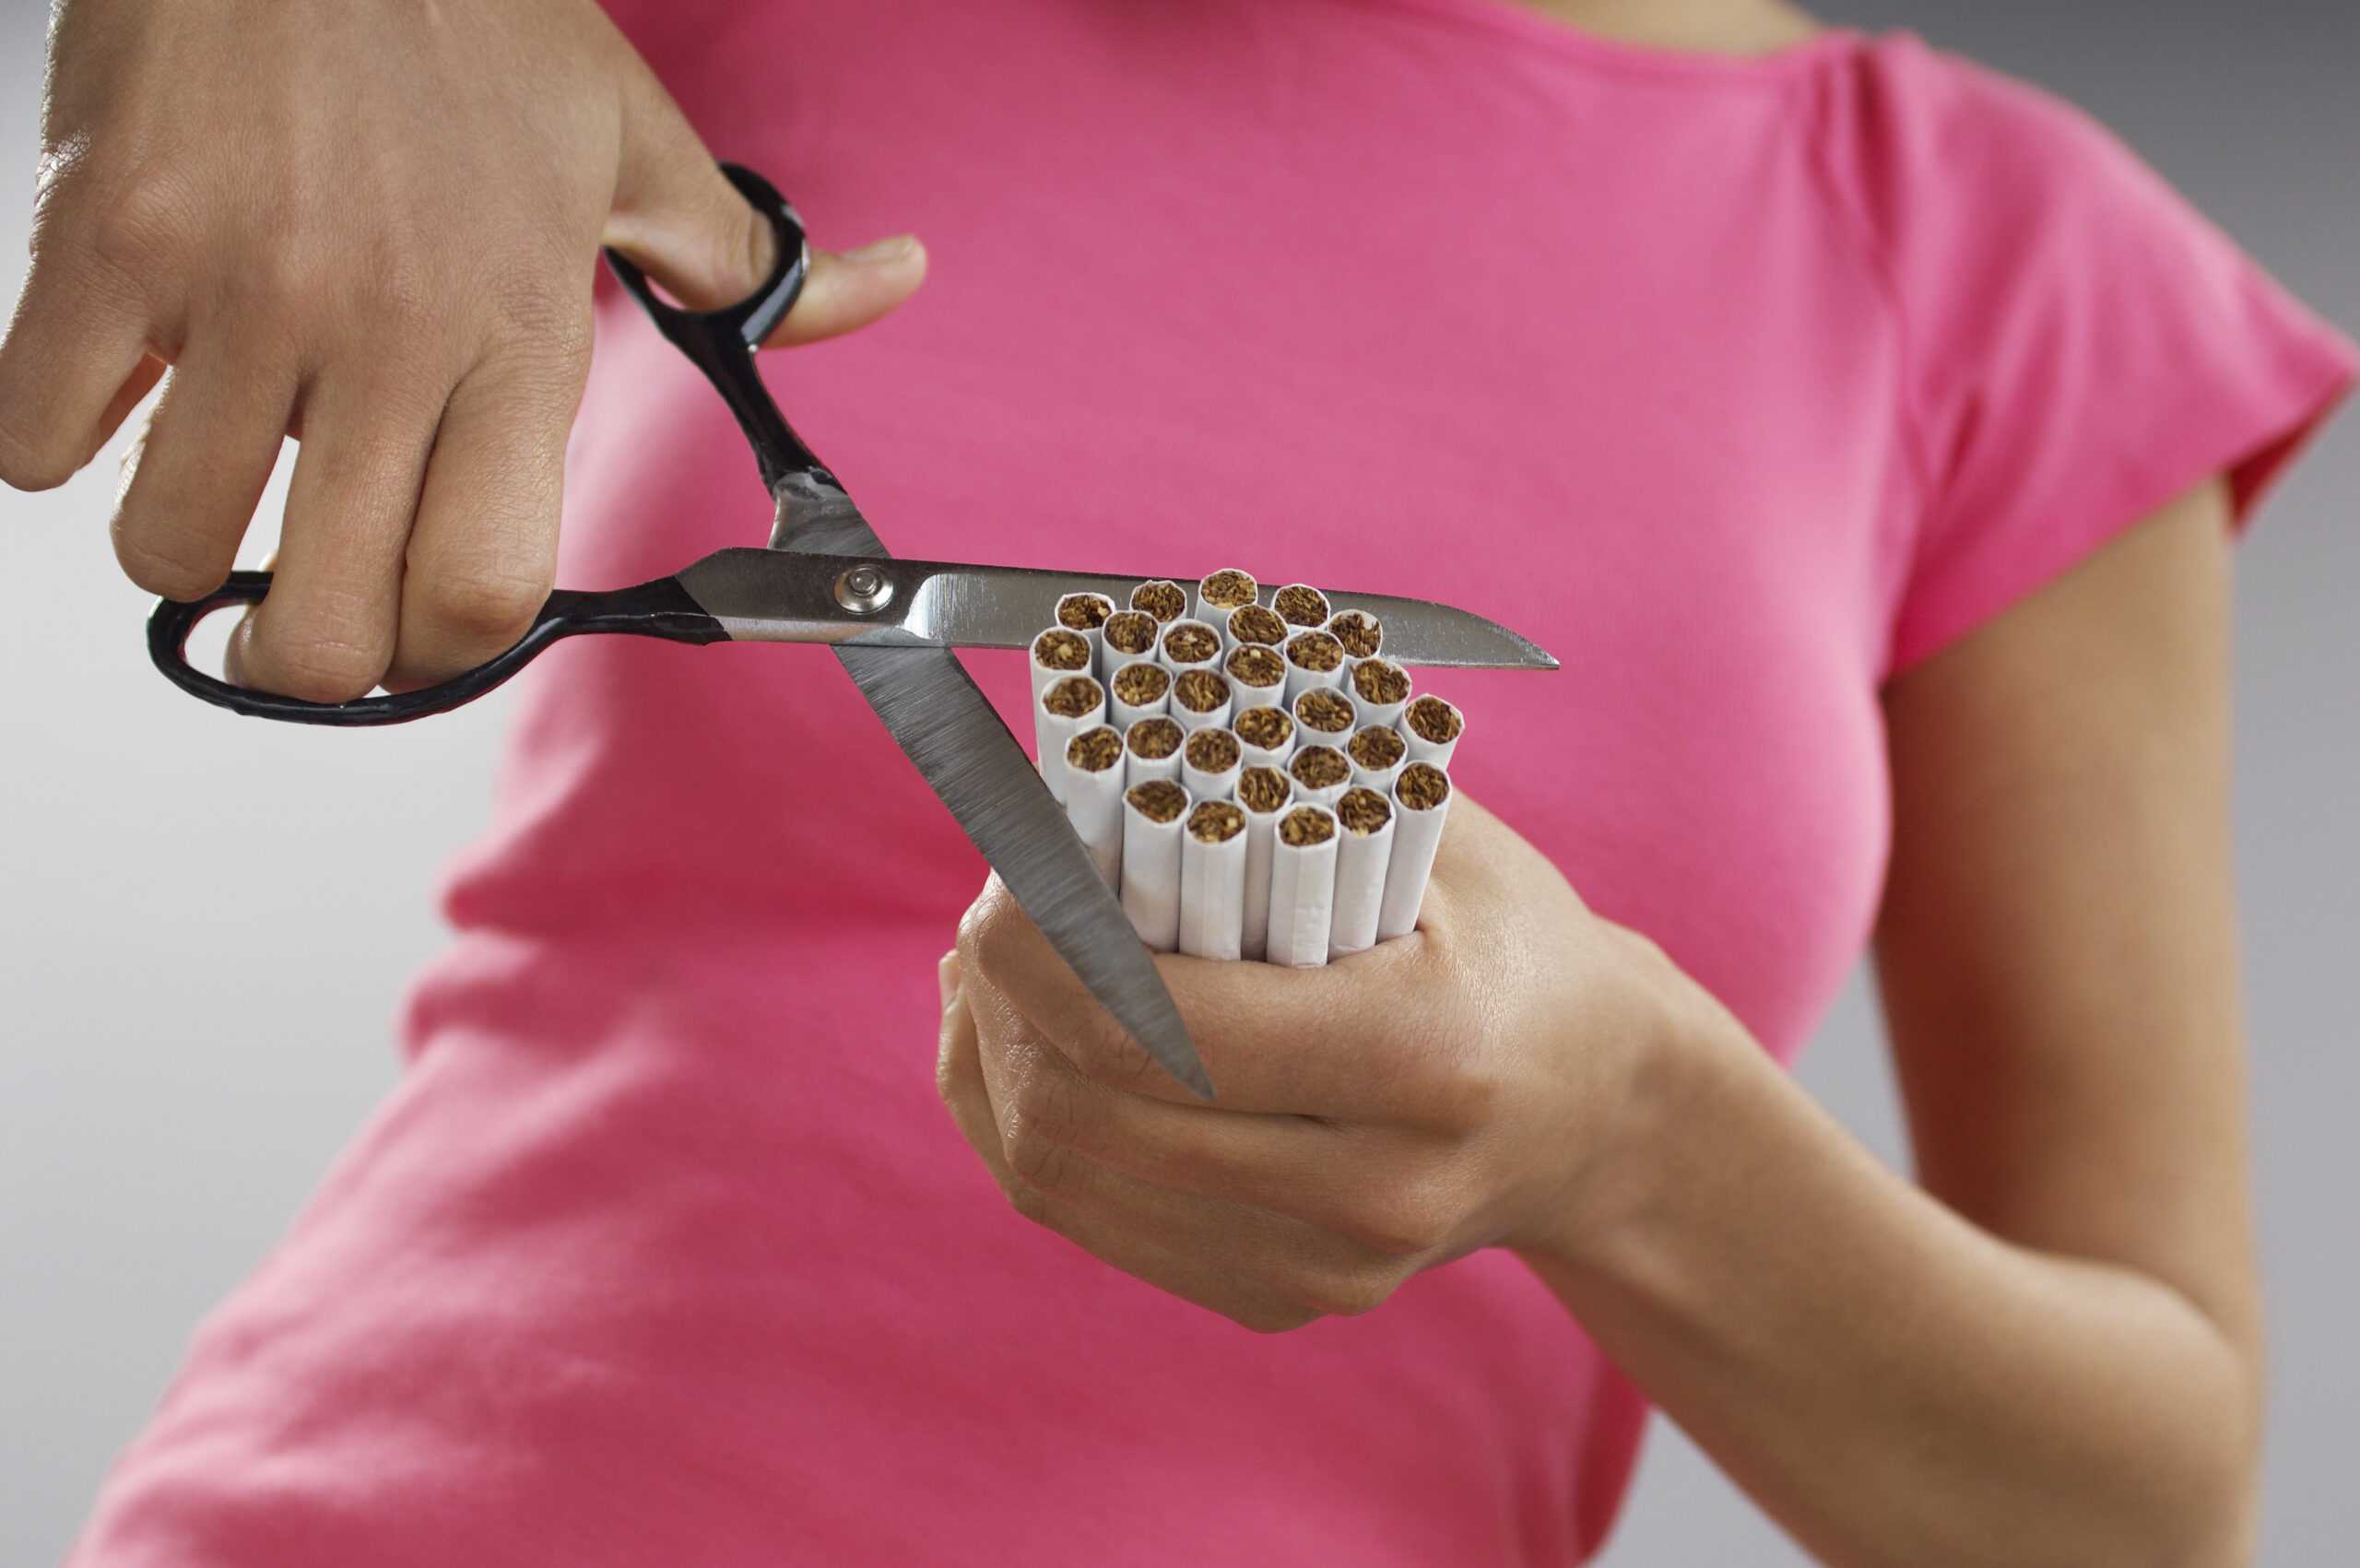 Why quit smoking